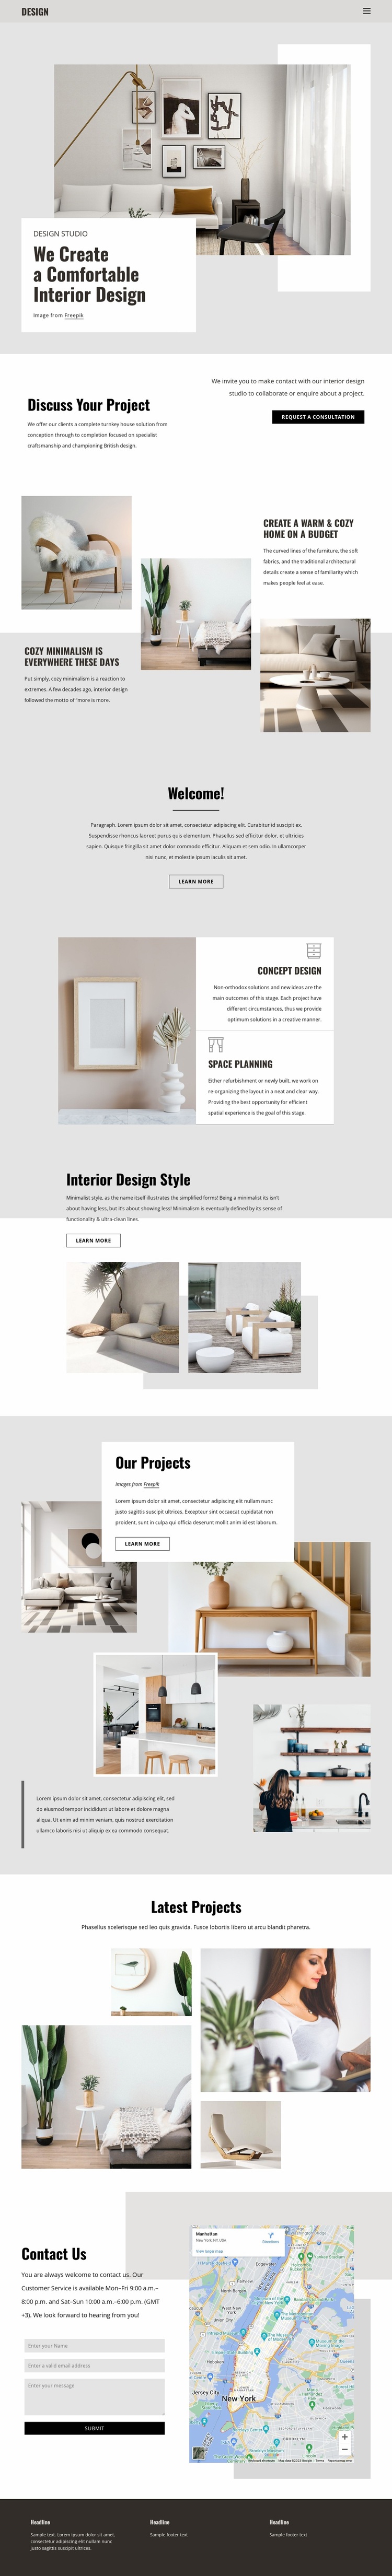 Designing Spaces and building dreams Website Design